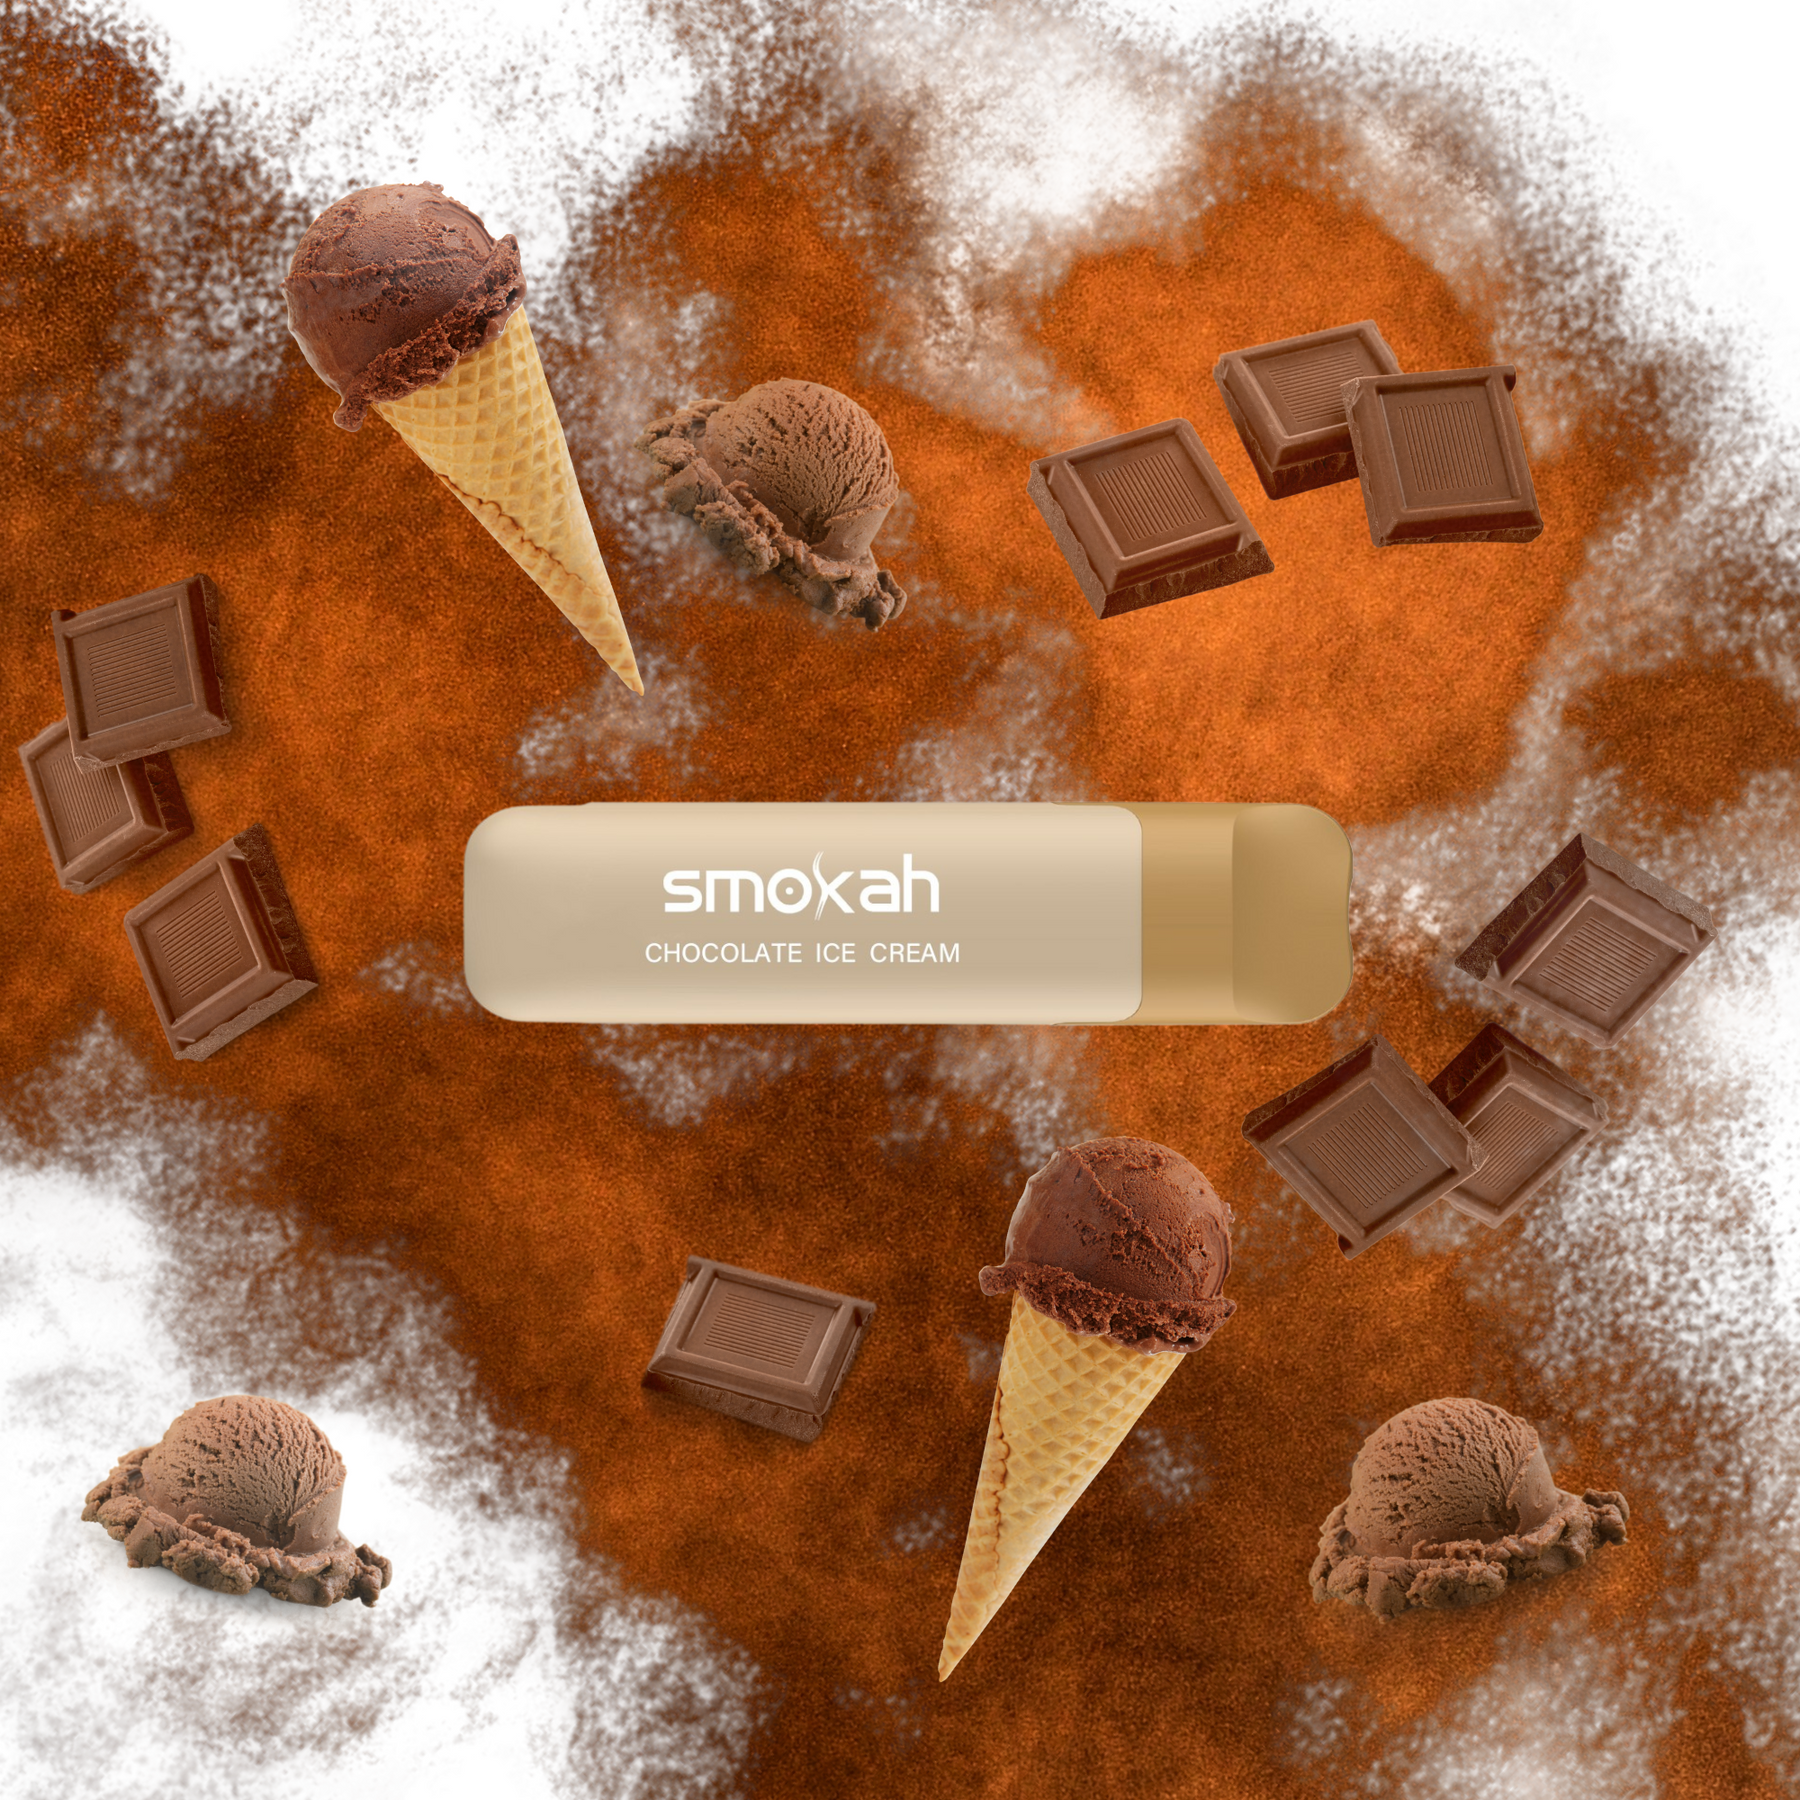 Smokah GLAMEE Chocolate Ice Cream "Schokoladeneis" 10er Packung / Display (Sparset)